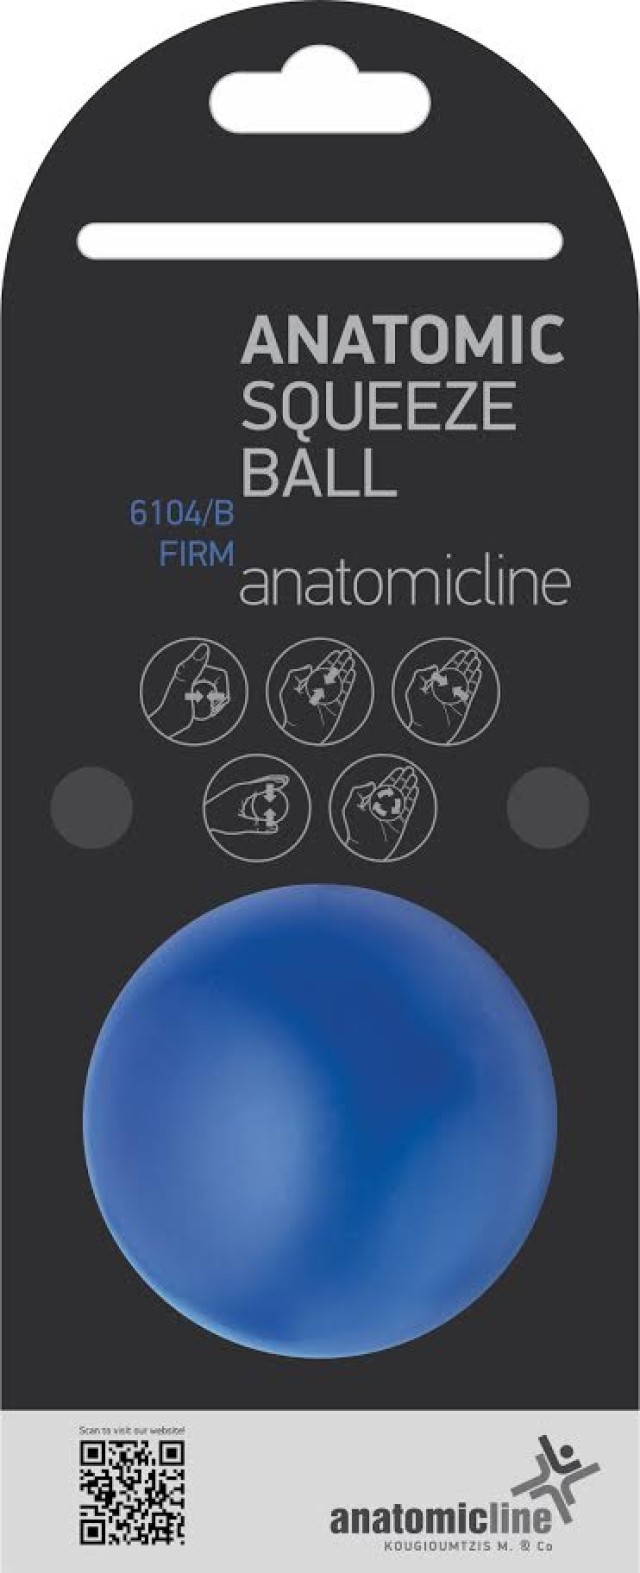 Anatomic Line Squeeze Ball Firm Μπαλάκι Ασκήσεως Χειρός Σκληρό Χρώμα:Μπλέ 1 Τεμάχιο